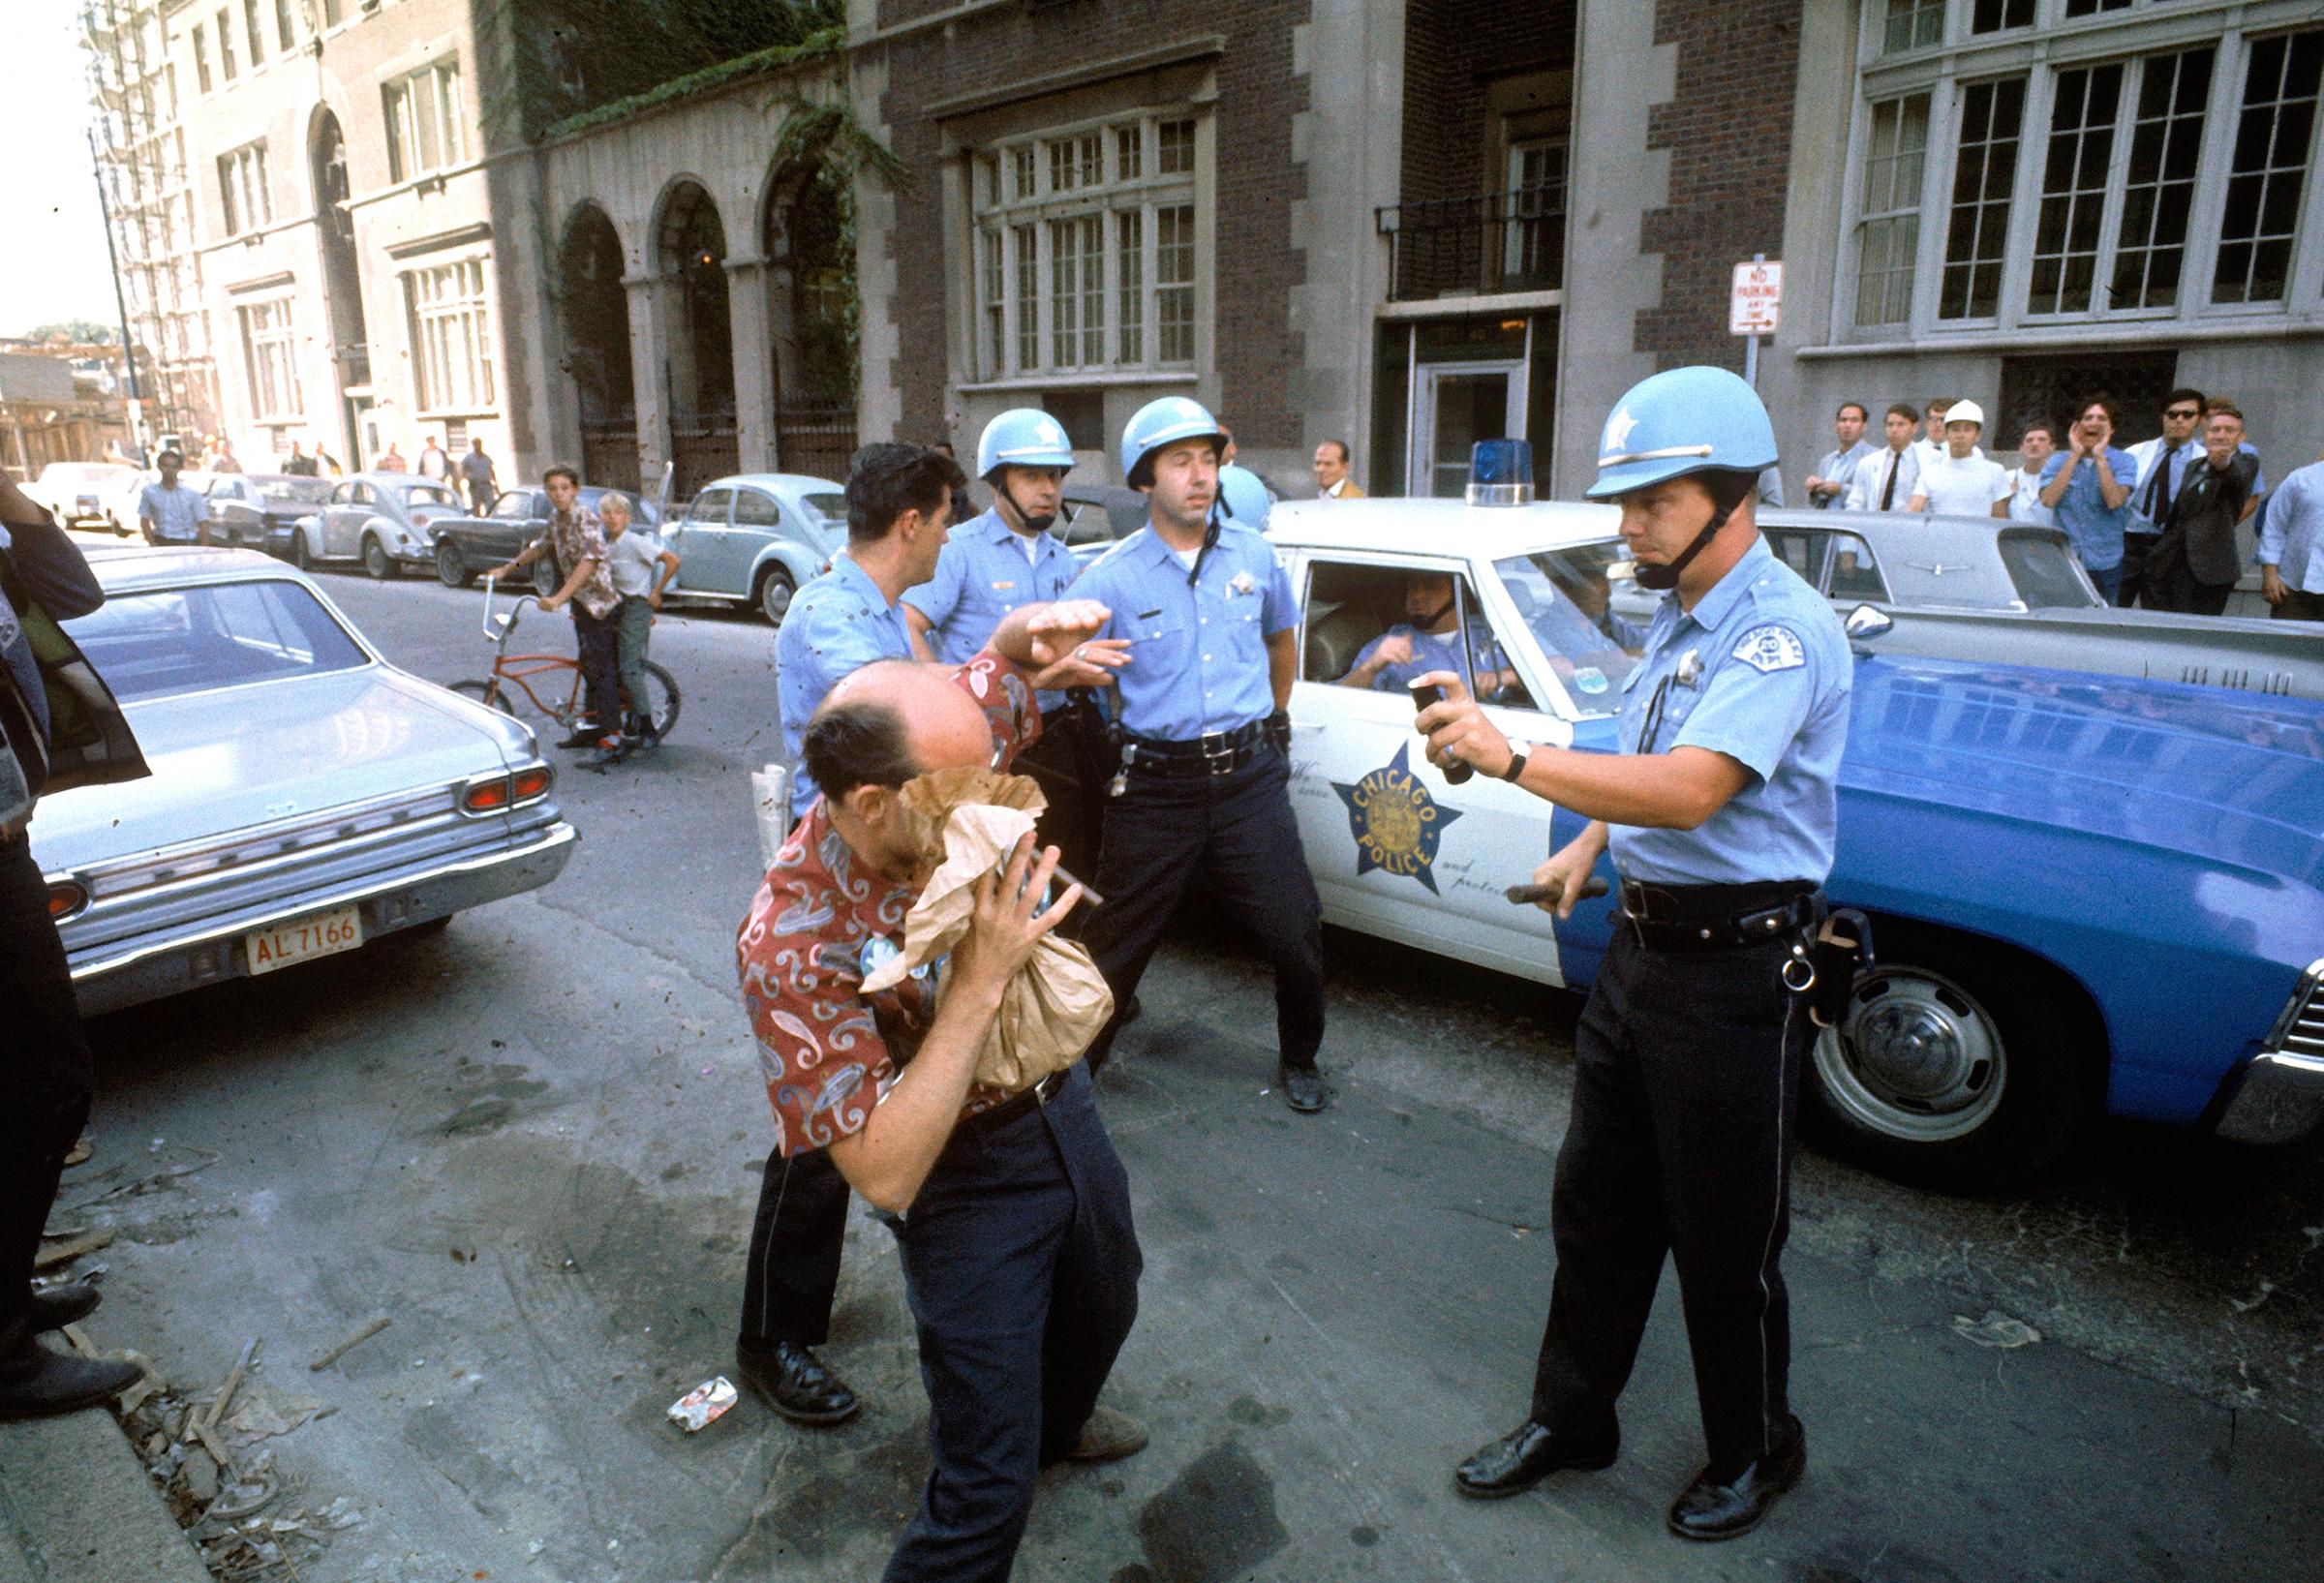 Democratic Convention riots in Chicago, 1968.